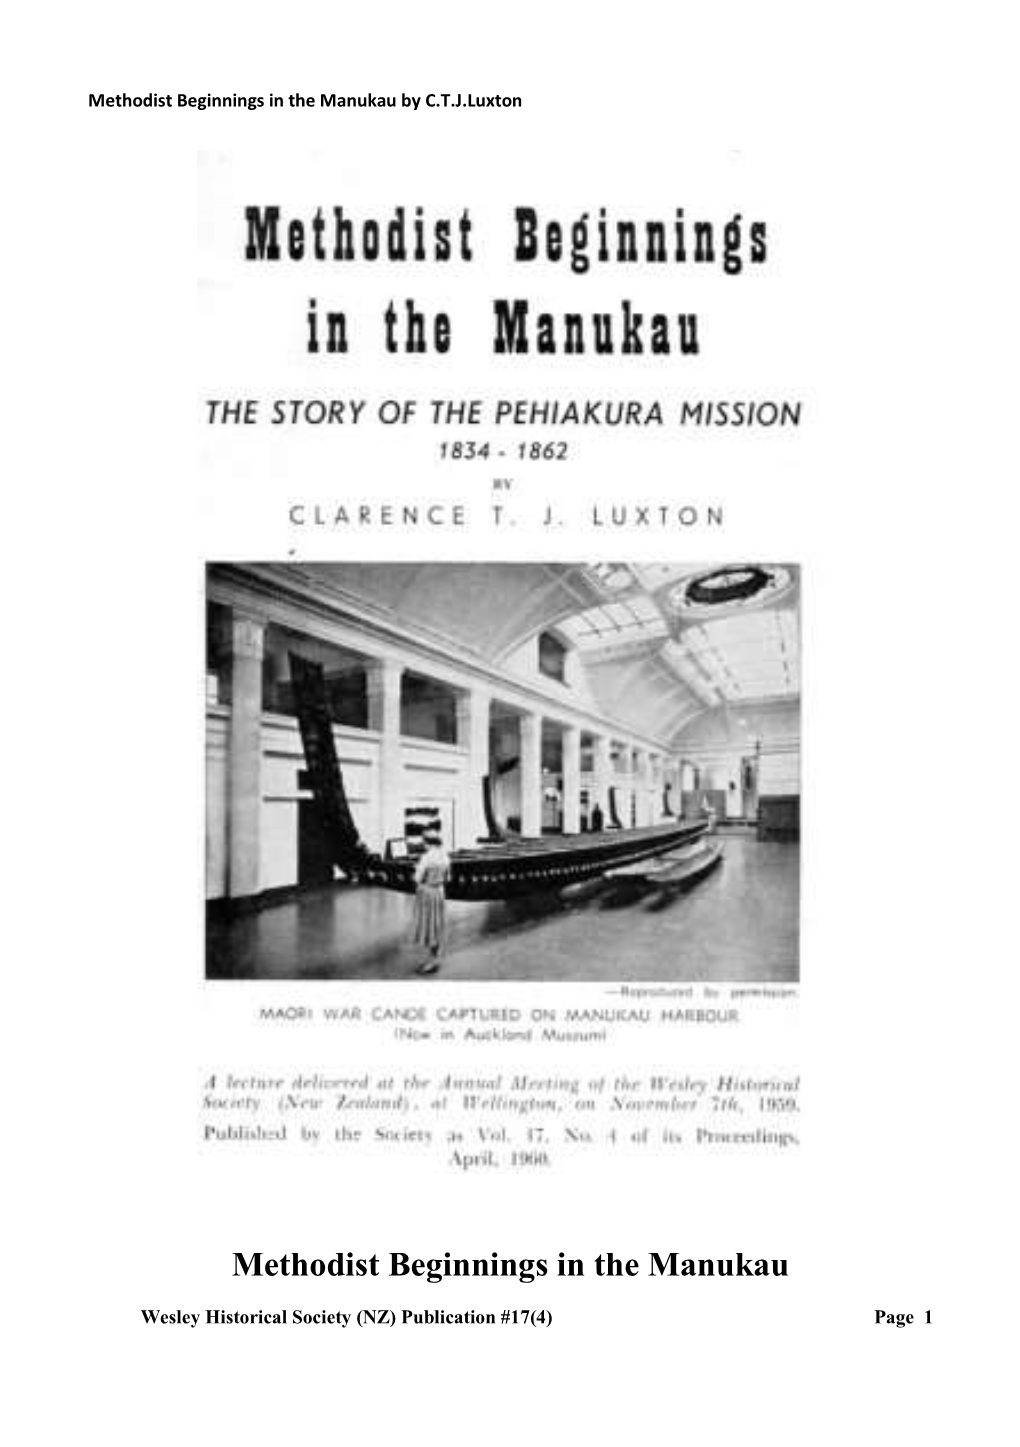 Methodist Beginnings in the Manukau by C.T.J.Luxton